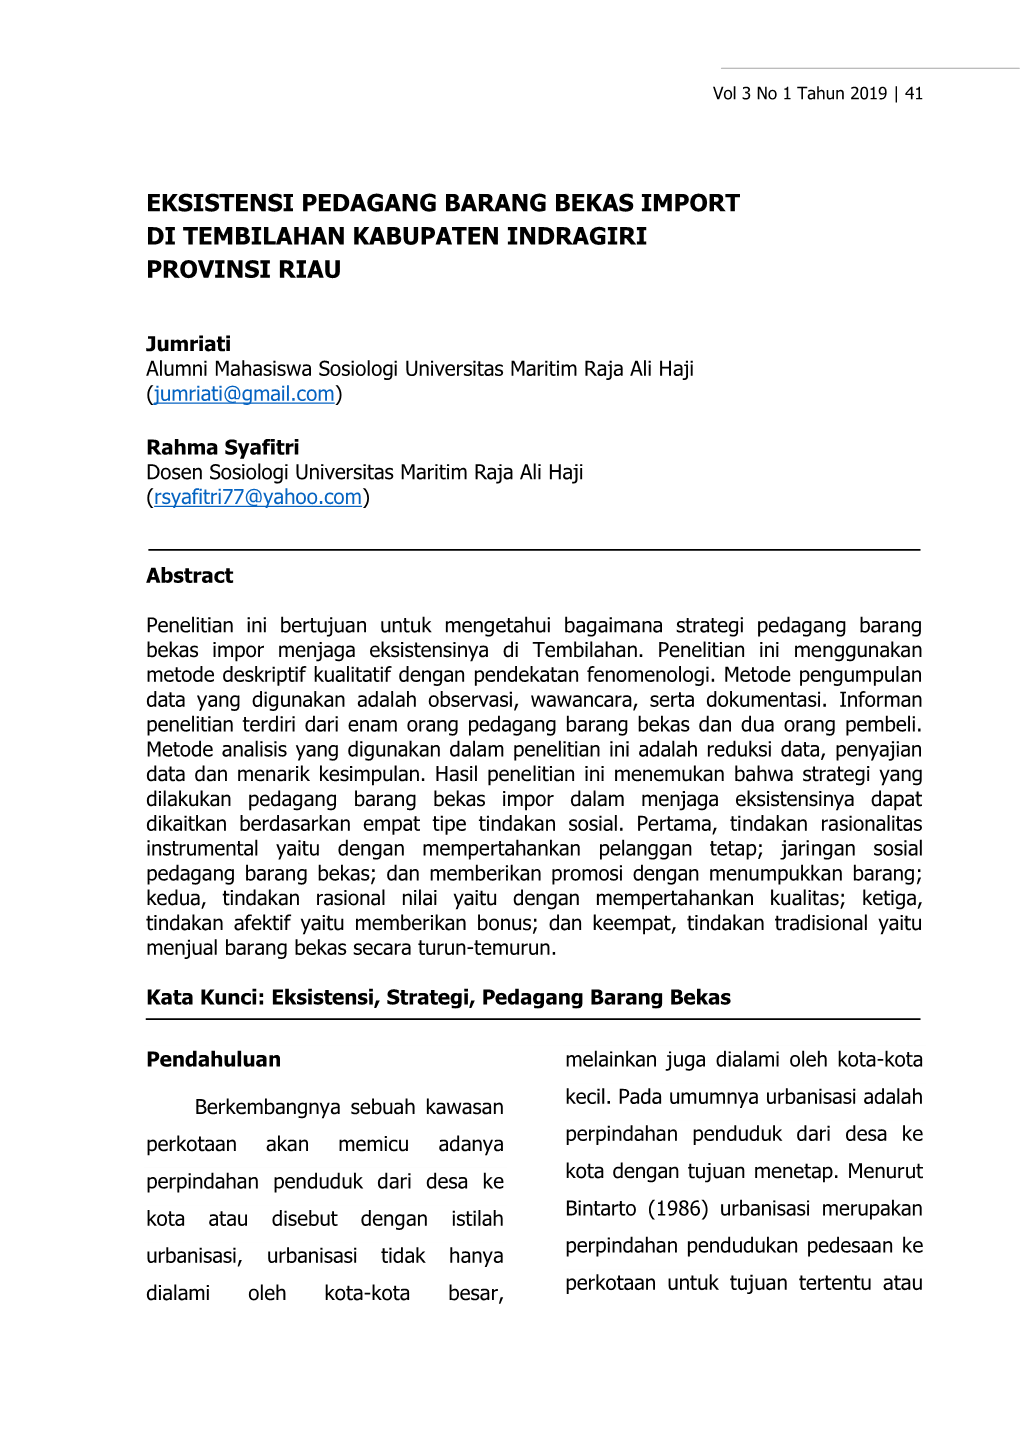 Eksistensi Pedagang Barang Bekas Import Di Tembilahan Kabupaten Indragiri Provinsi Riau